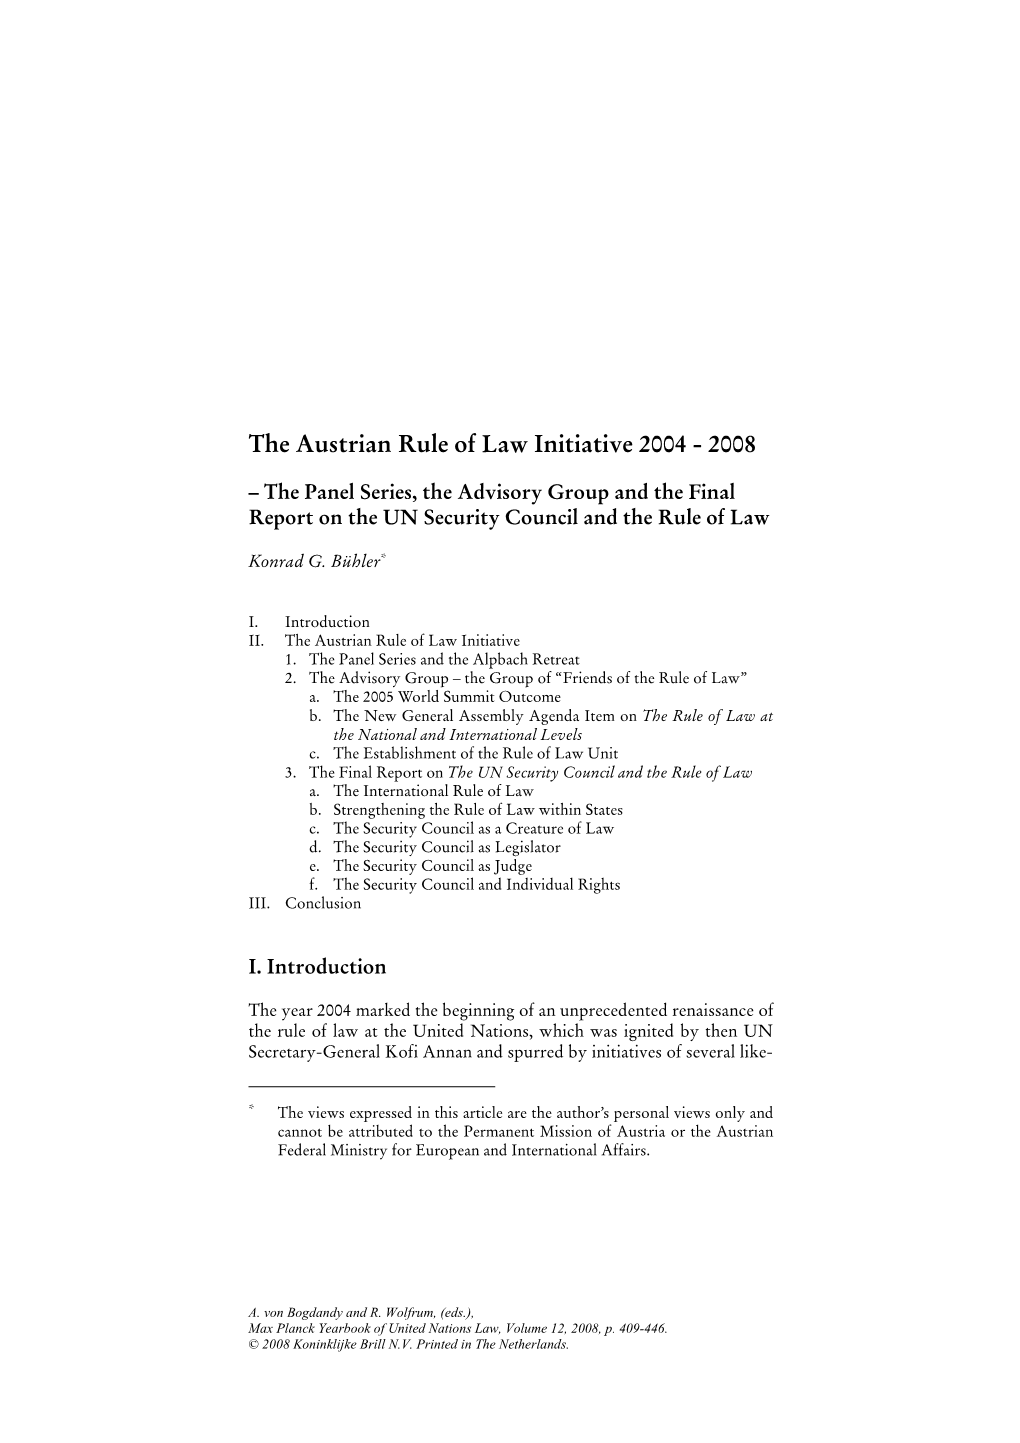 The Austrian Rule of Law Initiative 2004 - 2008